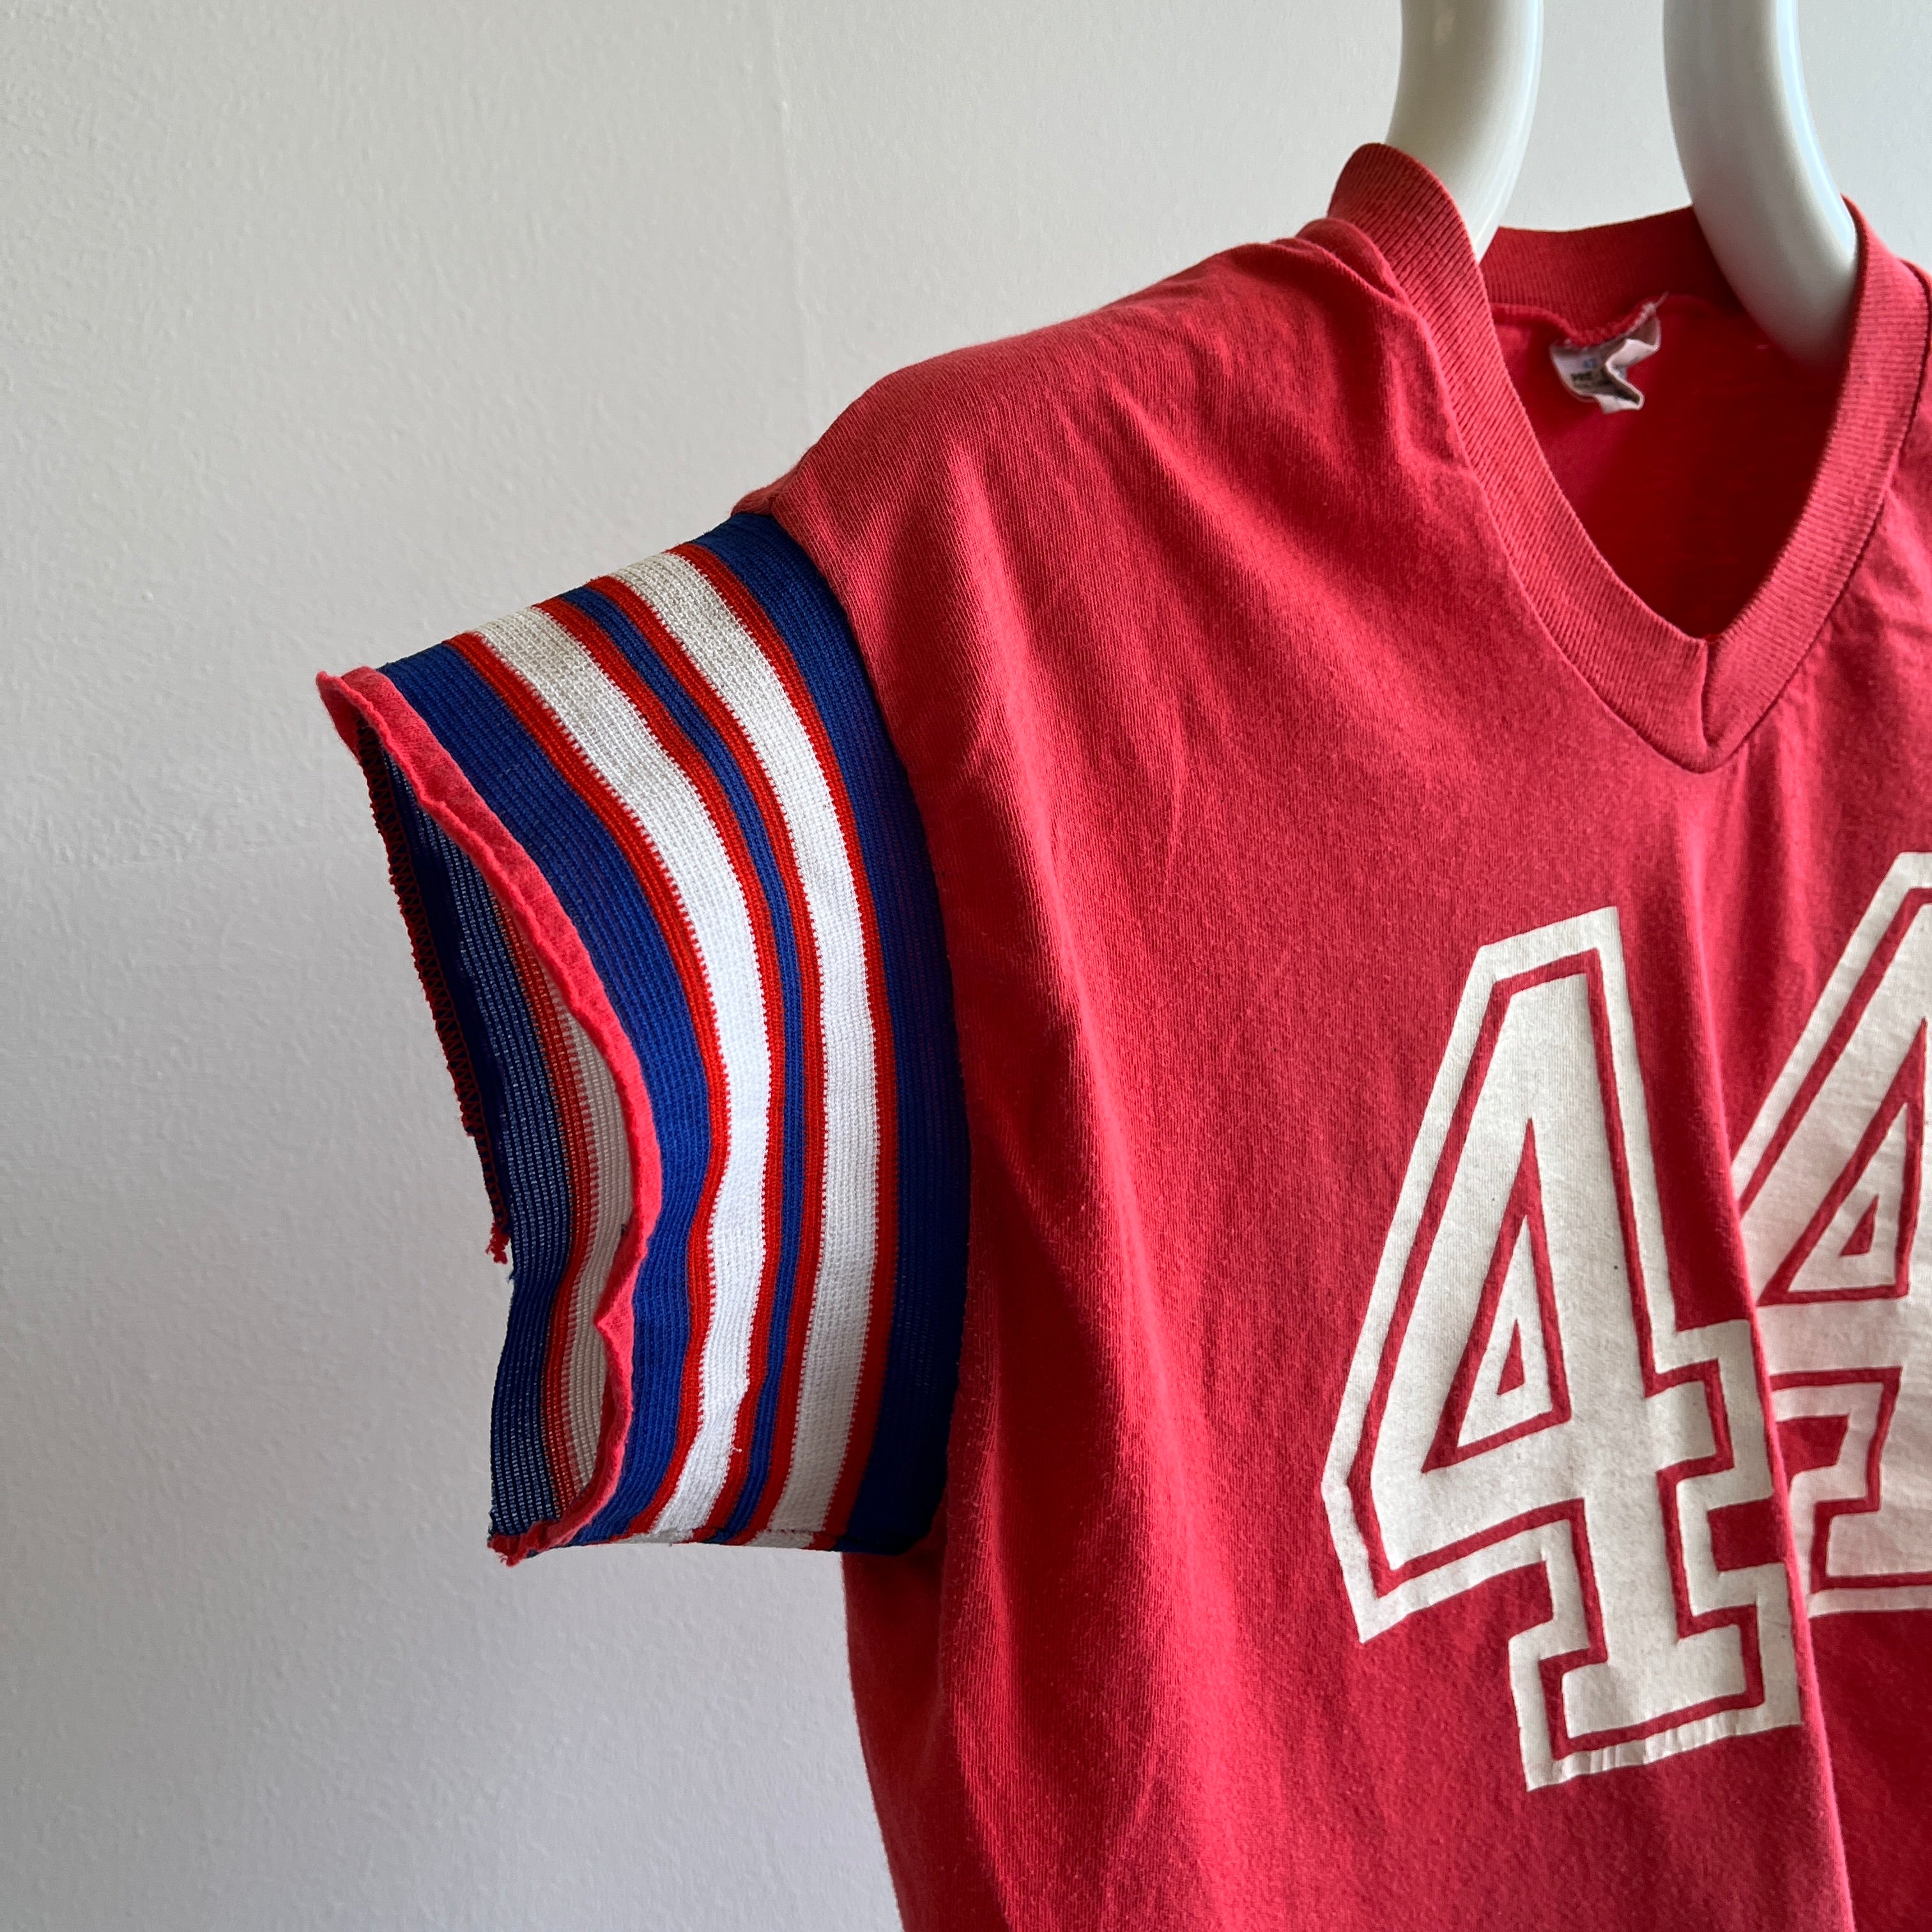 1970s No. 44 Cut Sleeve Football T-Shirt by Belton